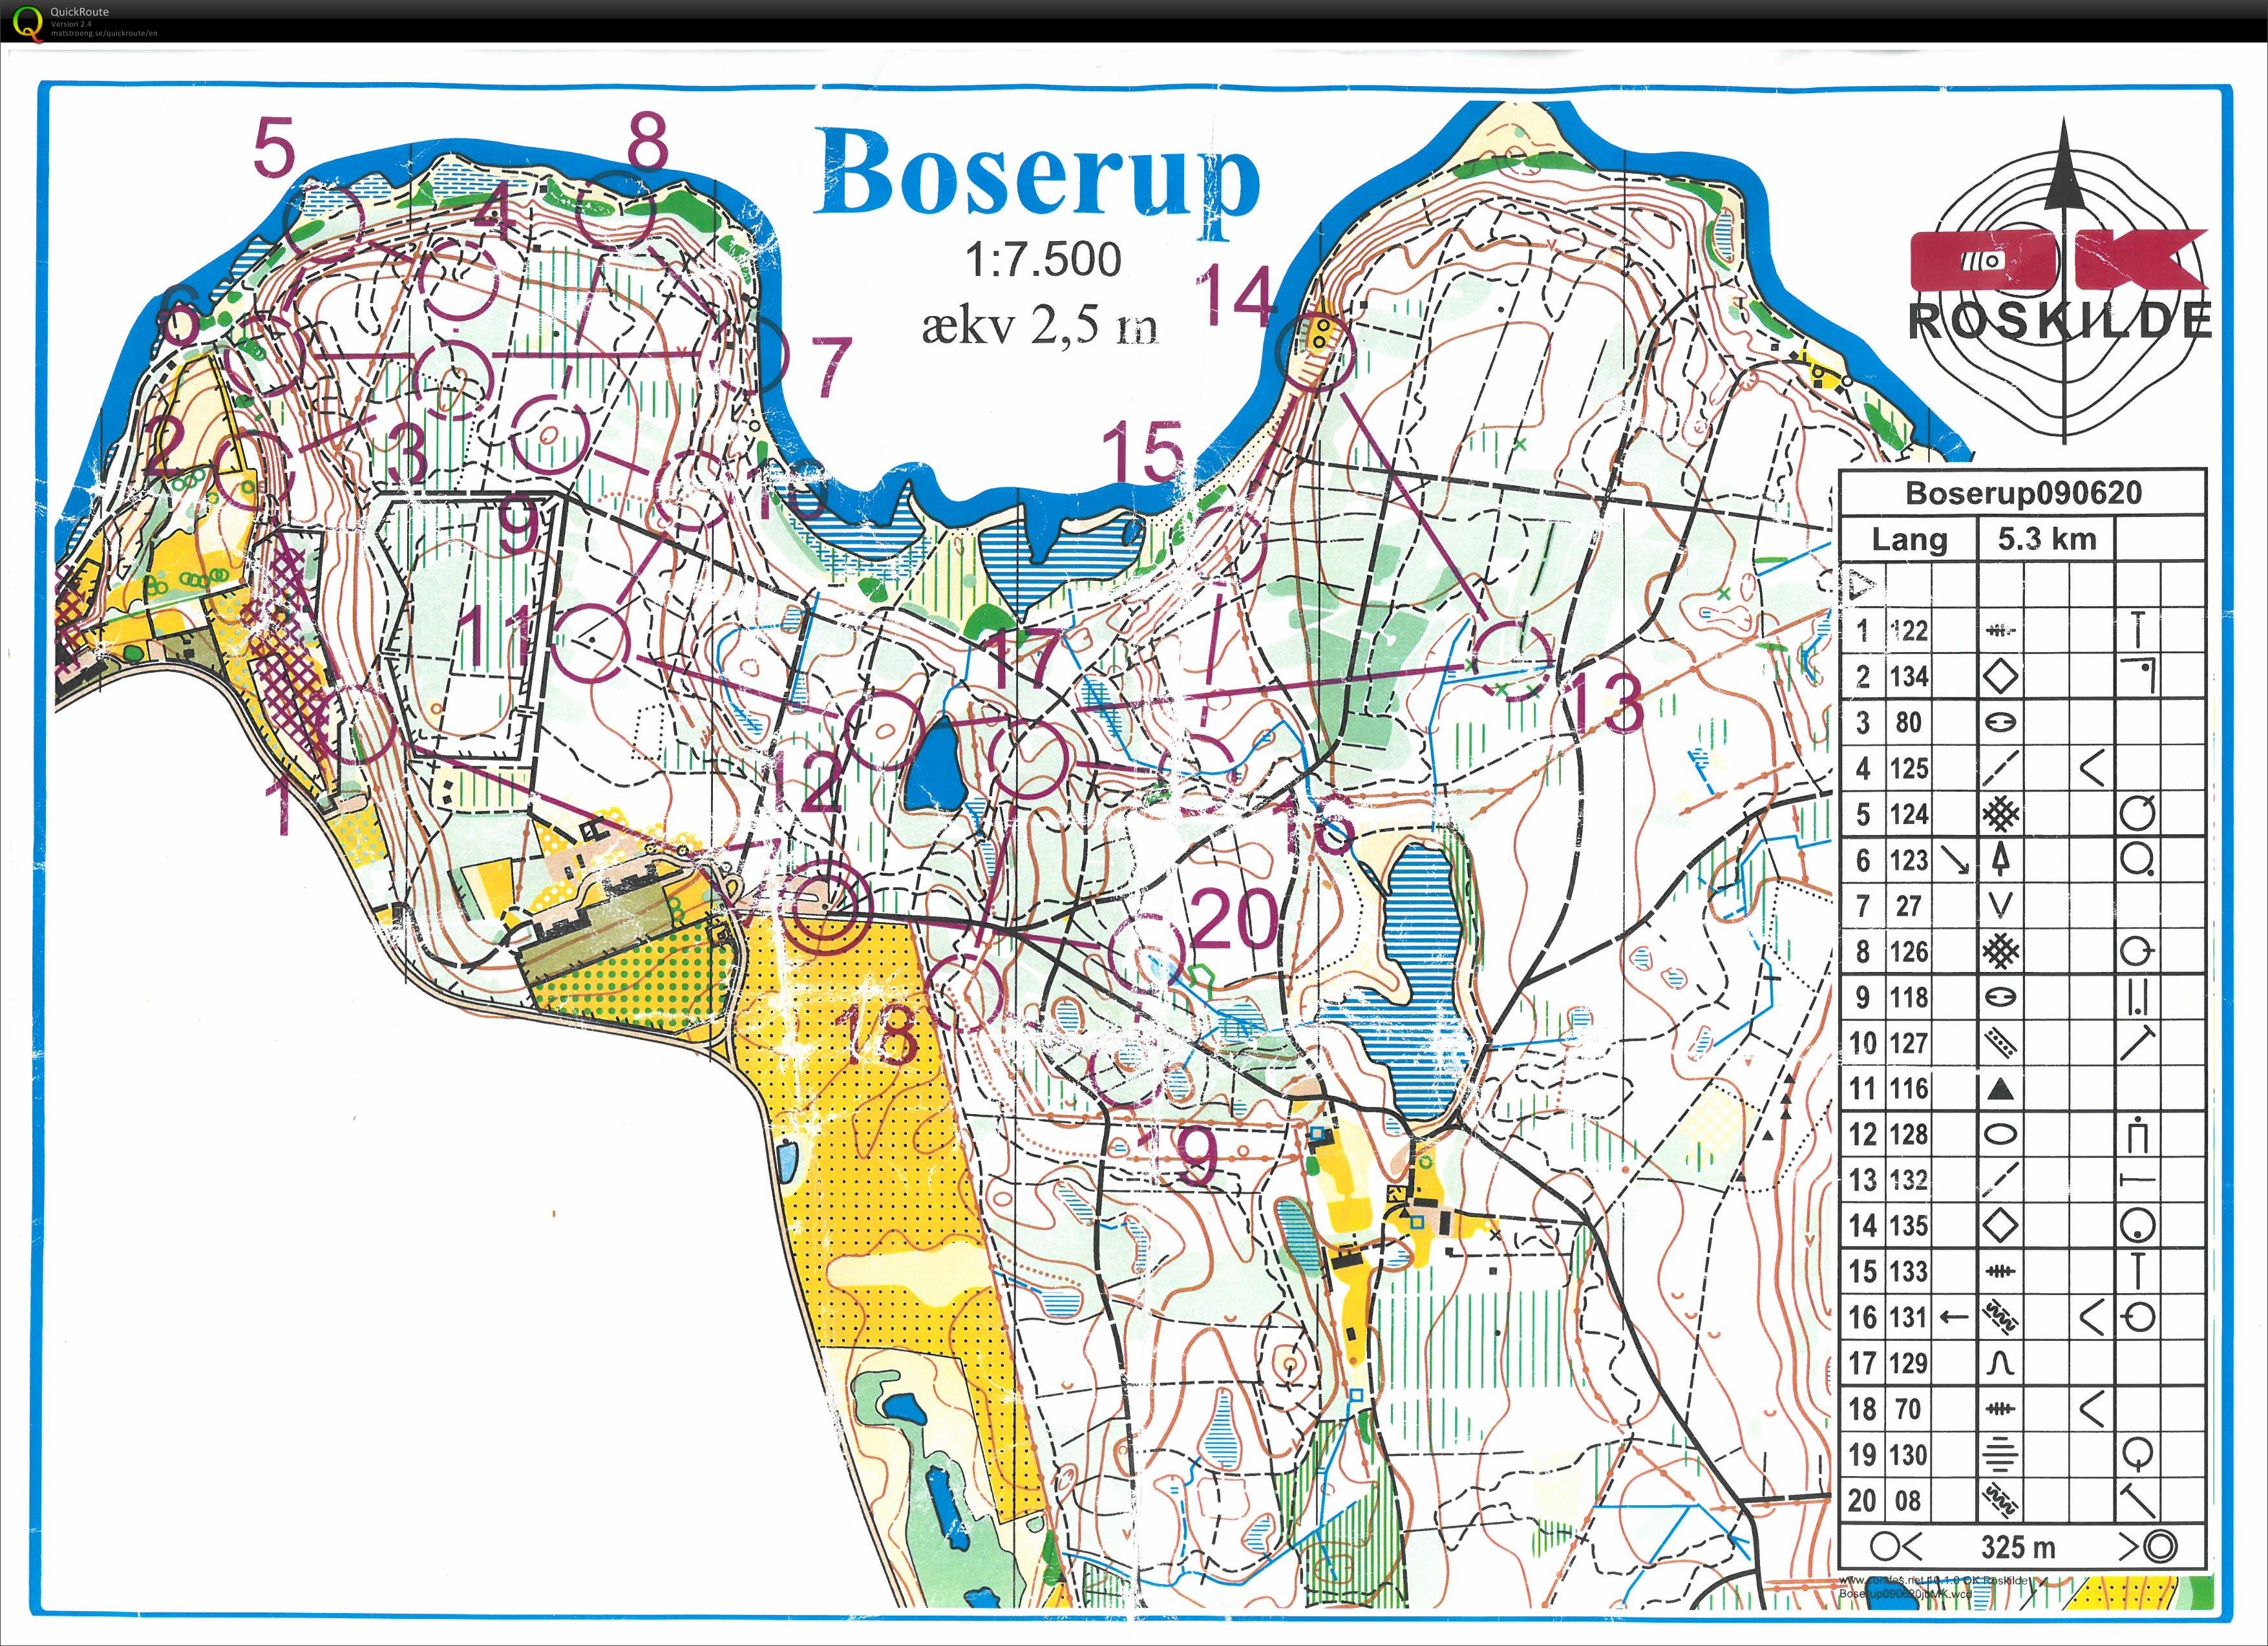 Tirsdagstræning i Boserup (09-06-2020)